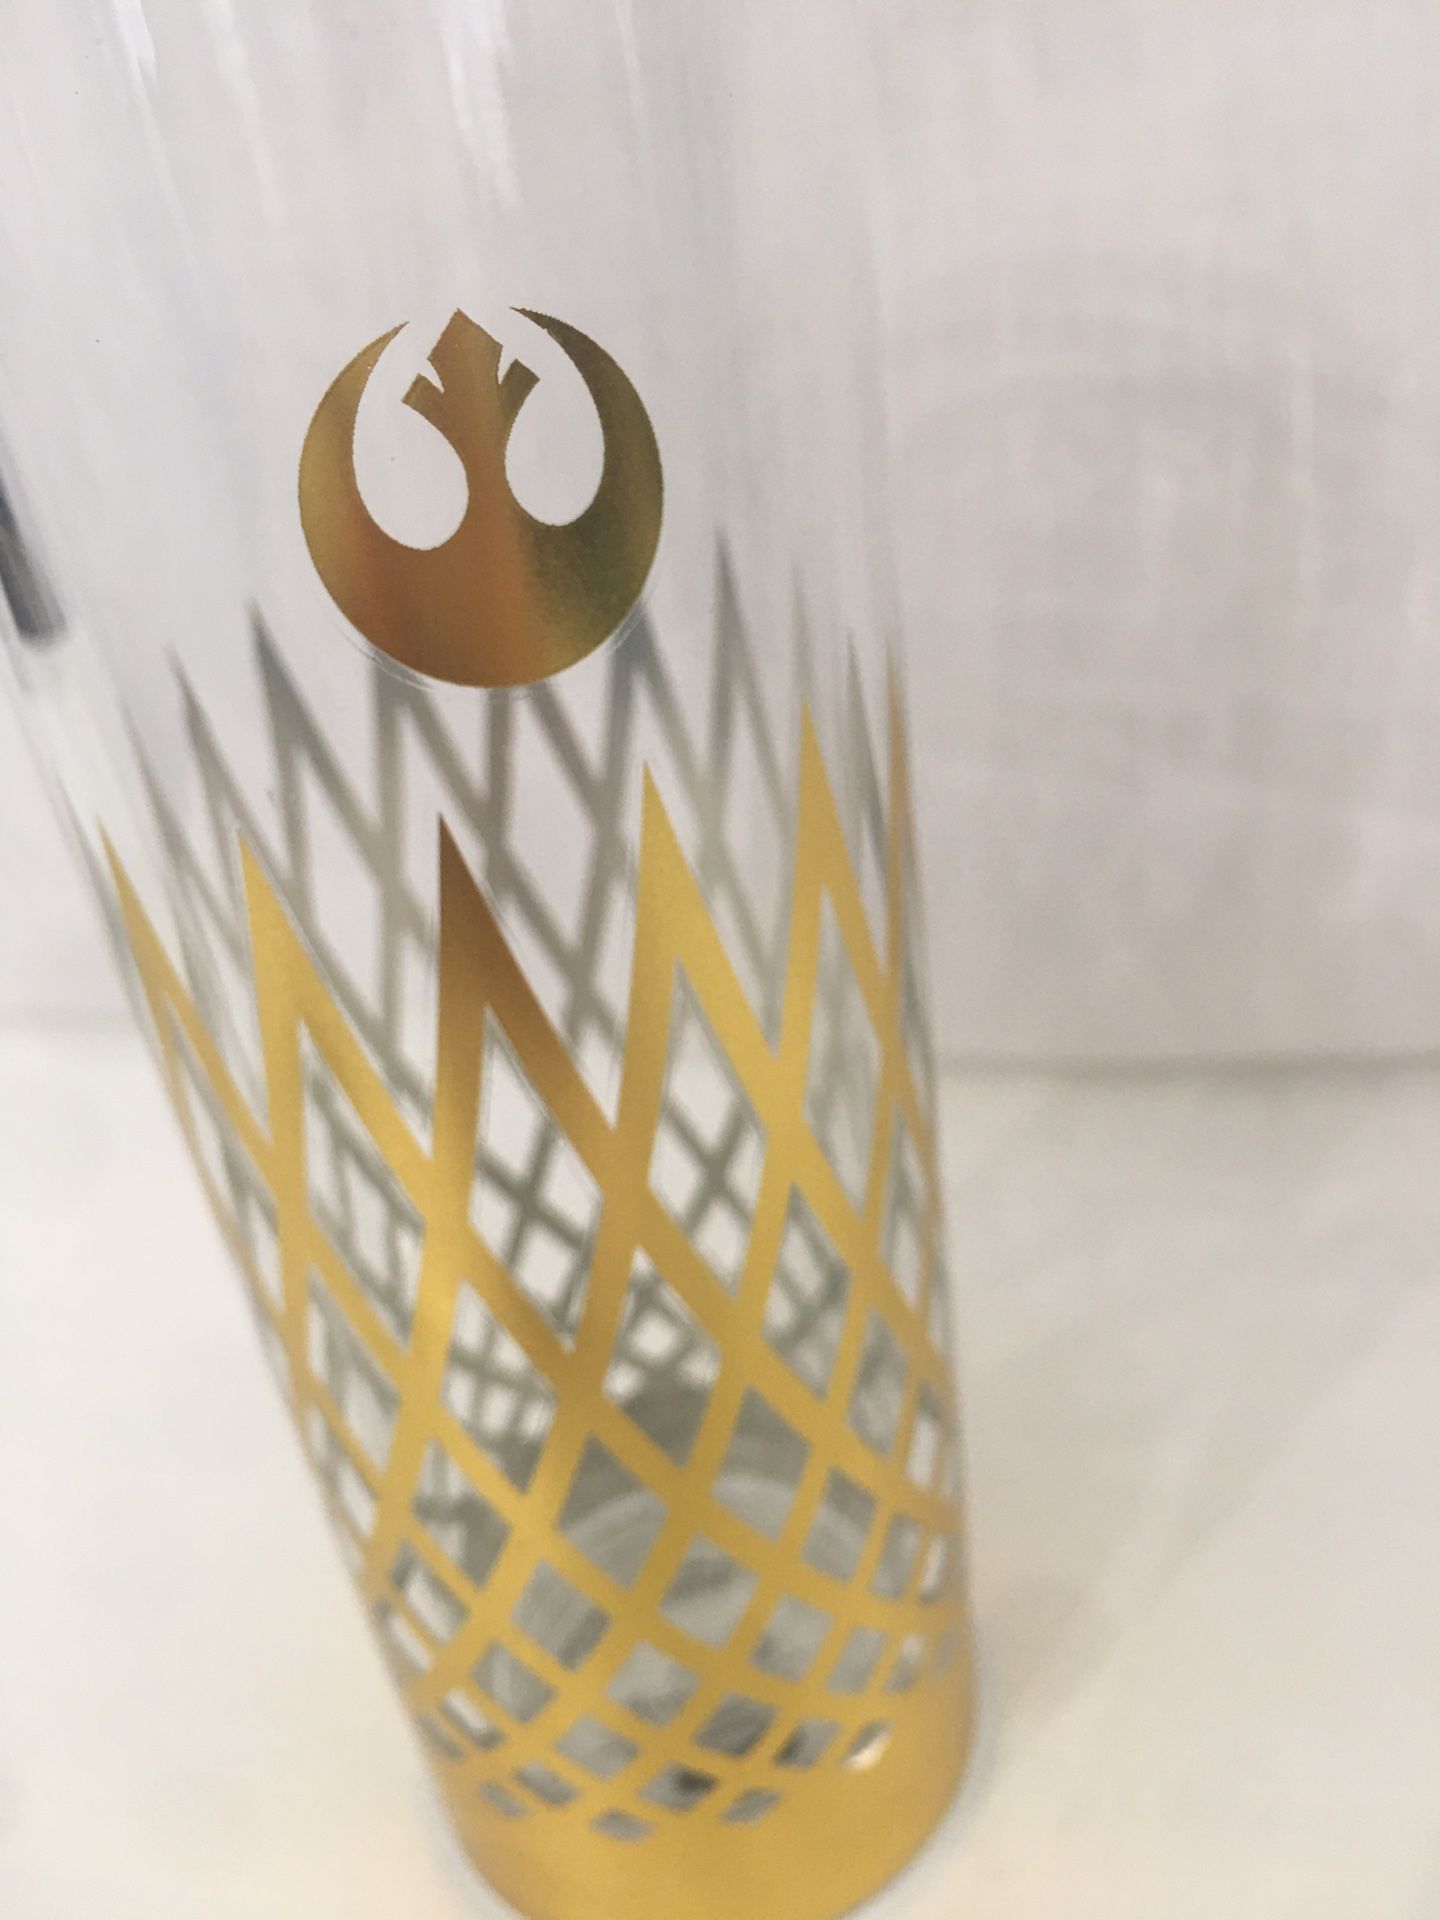 NEW Star Wars Rebel Alliance High Ball Glass